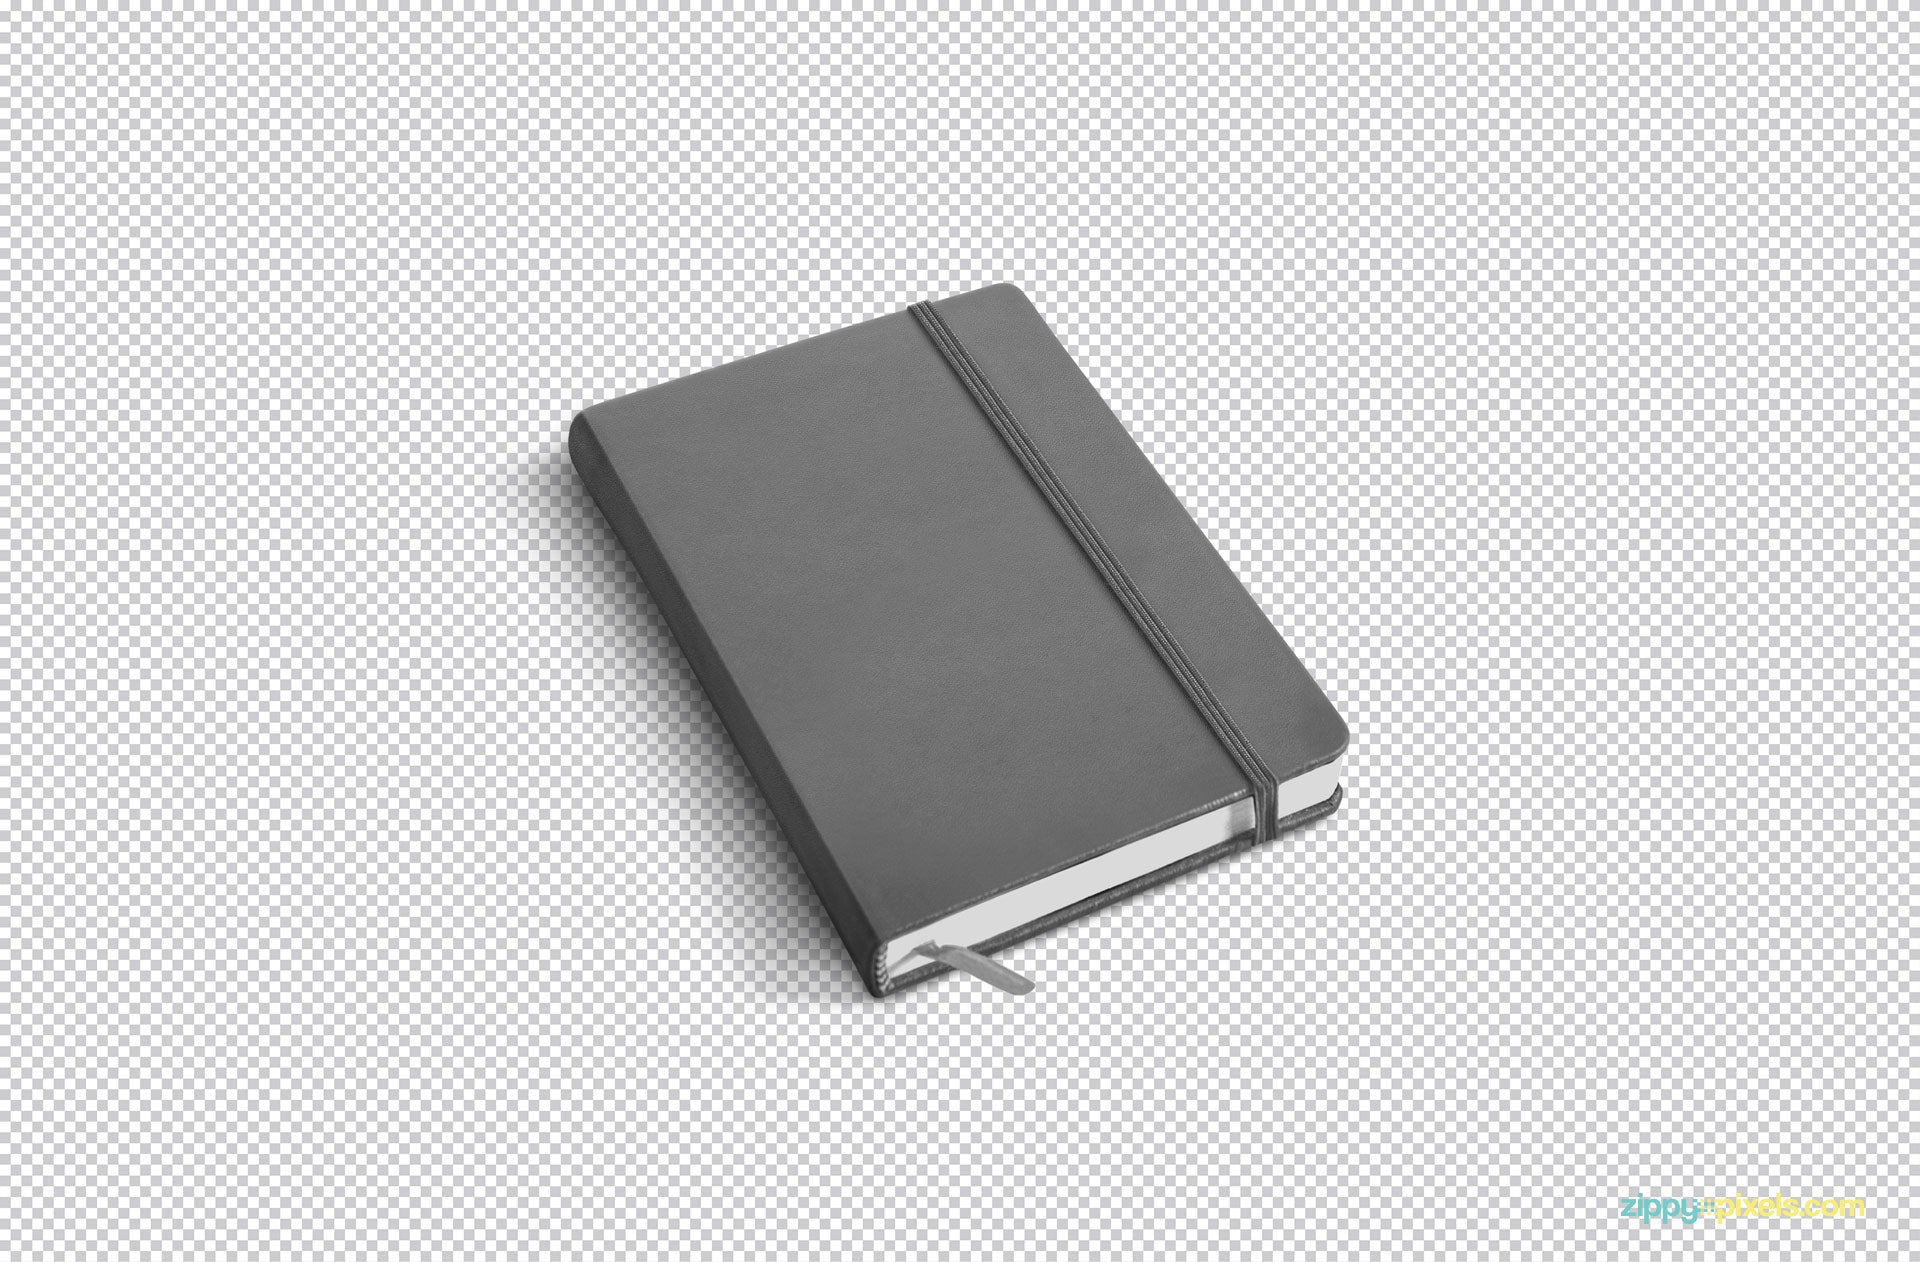 Download Free Notebook Mockup PSD - CreativeBooster